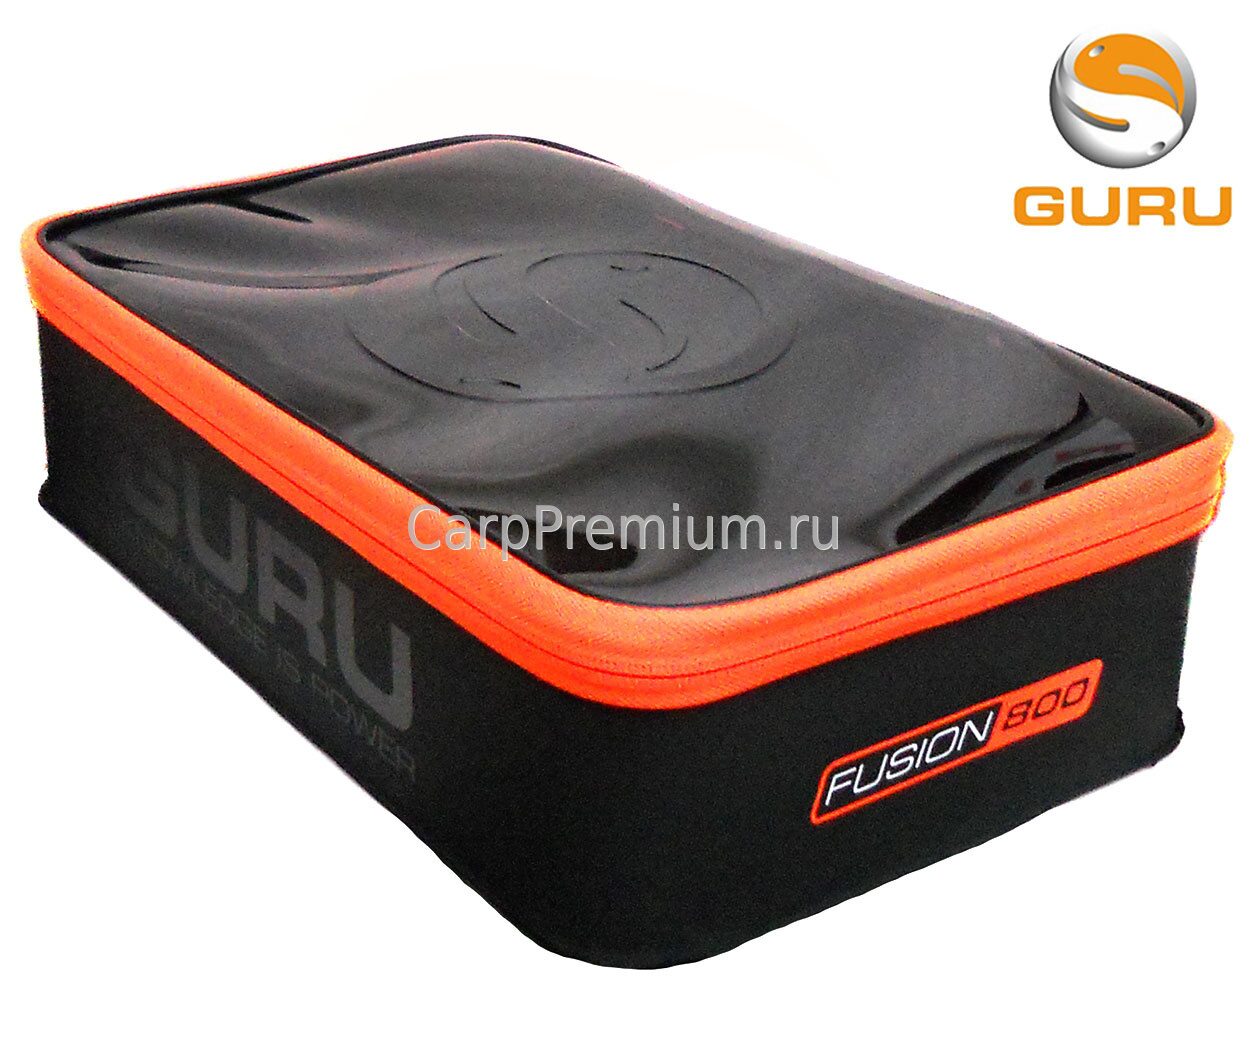 Коробка Guru (Гуру) - Fusion 800 Large, Размер Большой